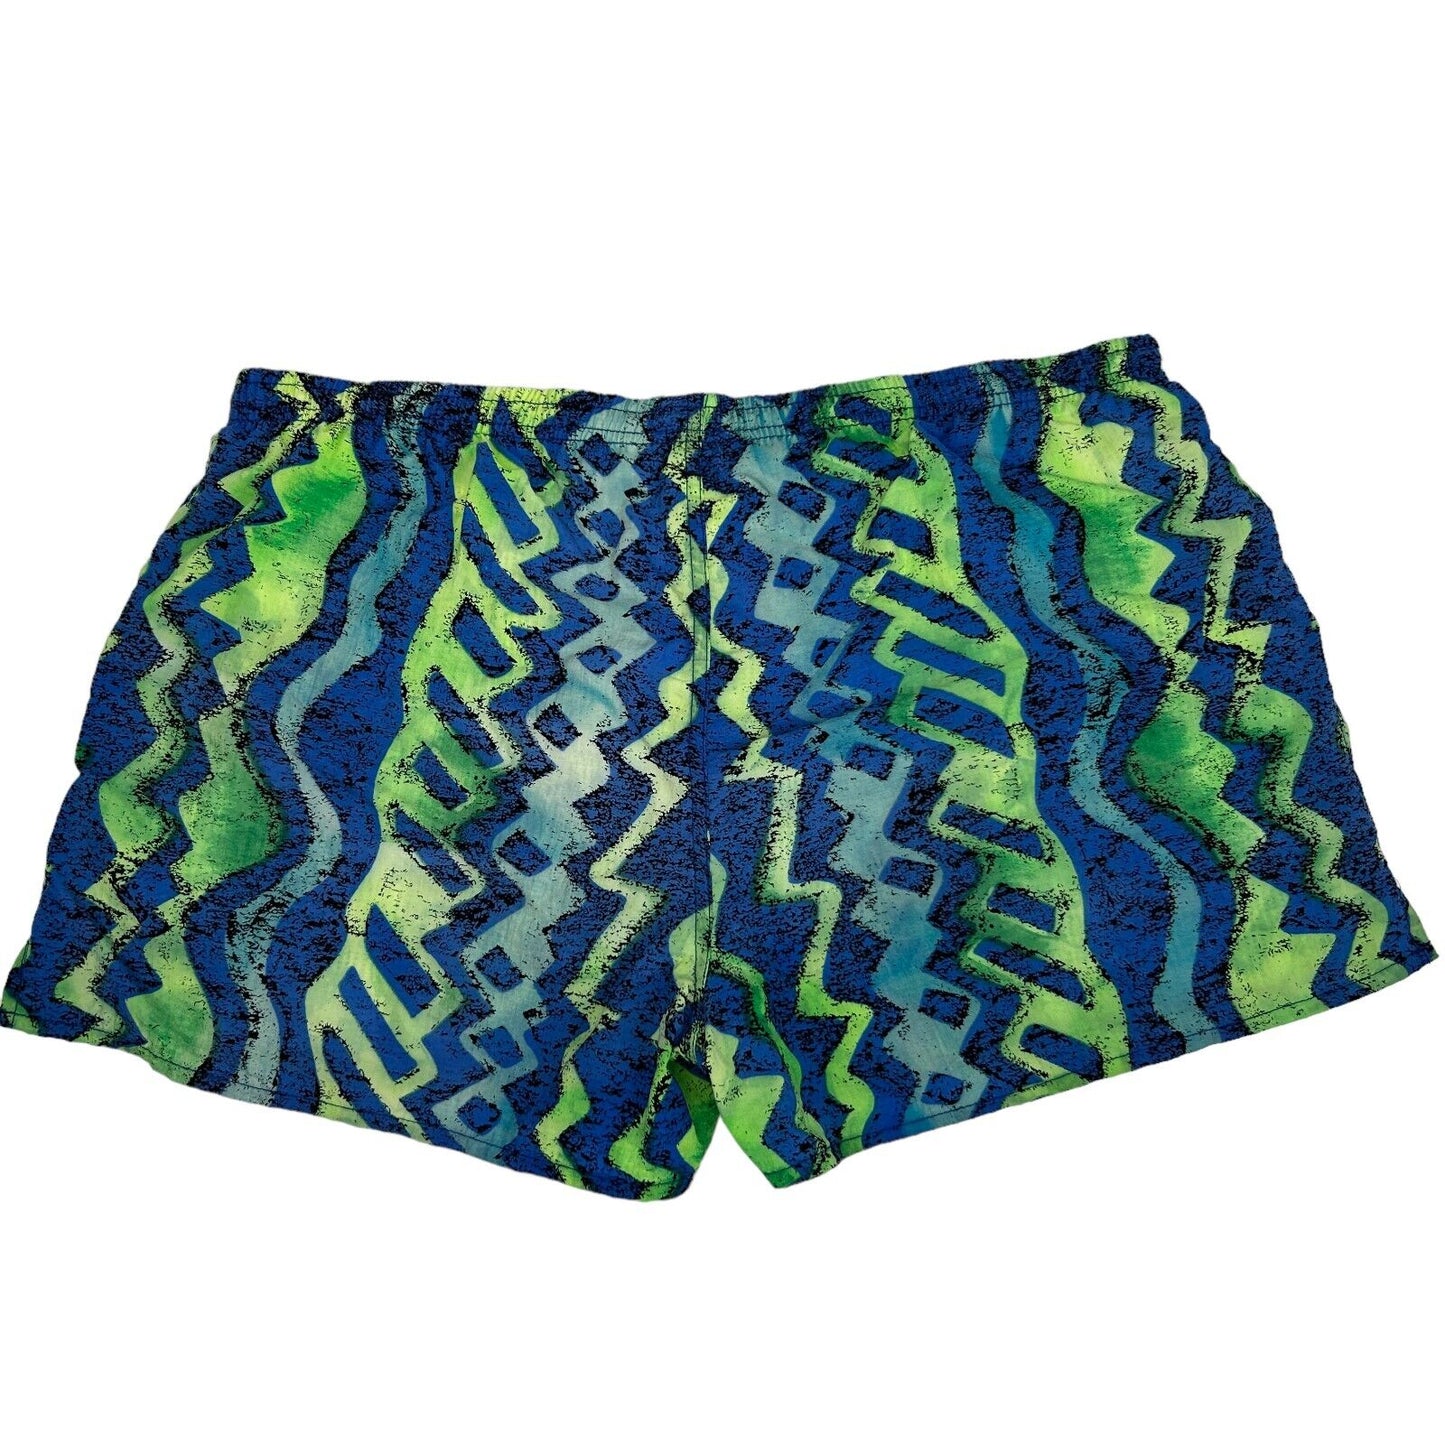 Sideline Sports Vintage 90s Swim Trunks Shorts Blue Green Lined Drawstring 2XL